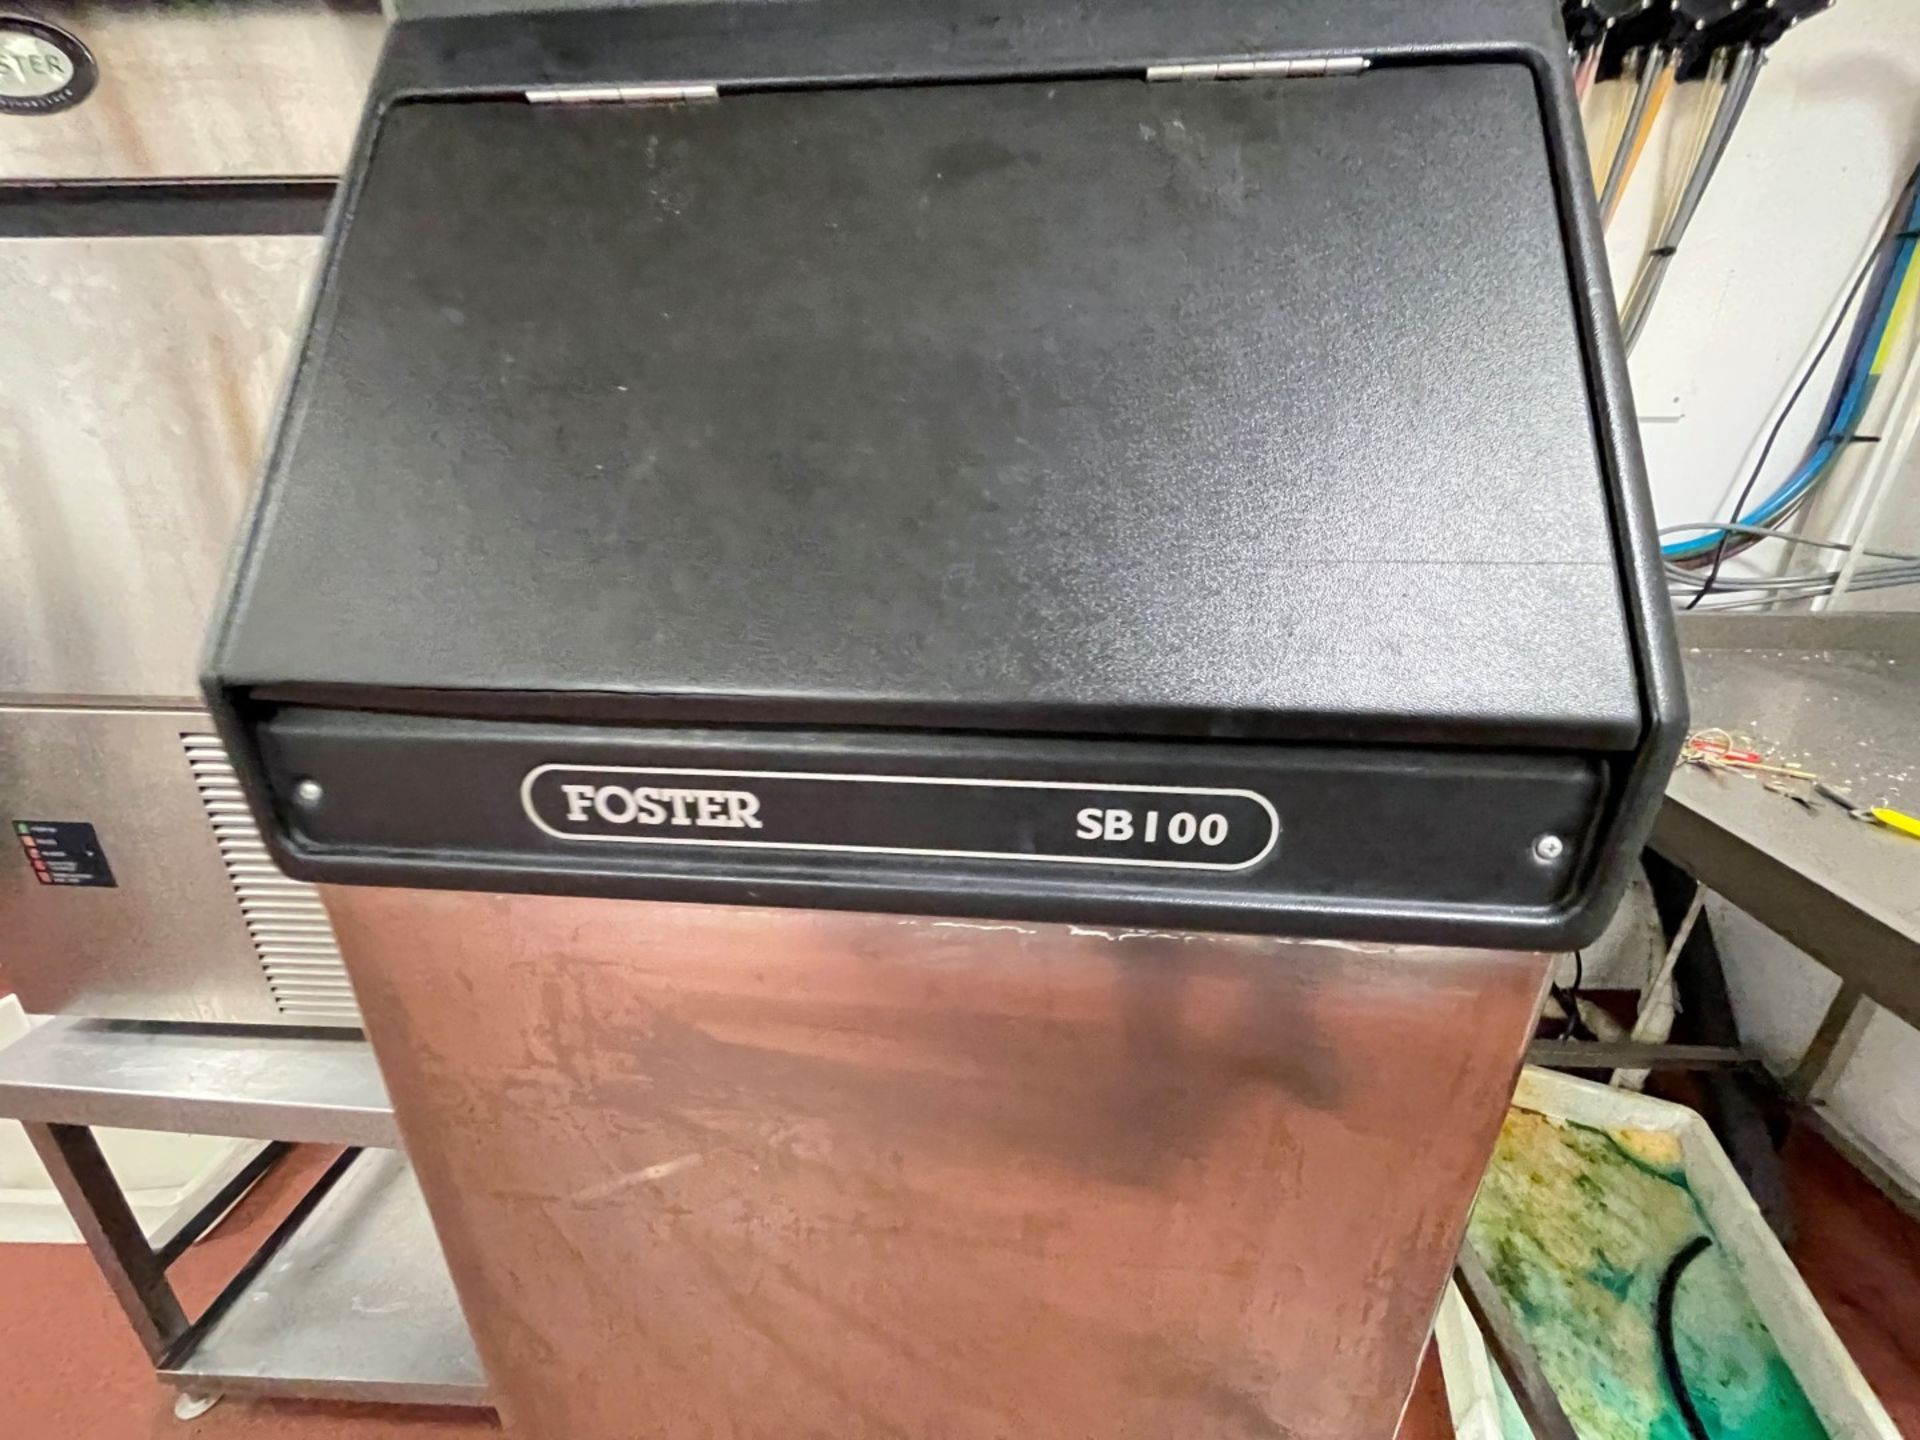 1 x Foster Ice Cube Maker Machine - Model F132 With SB100 Ice Storage Bin - 138kg Per 24hr - Image 3 of 6